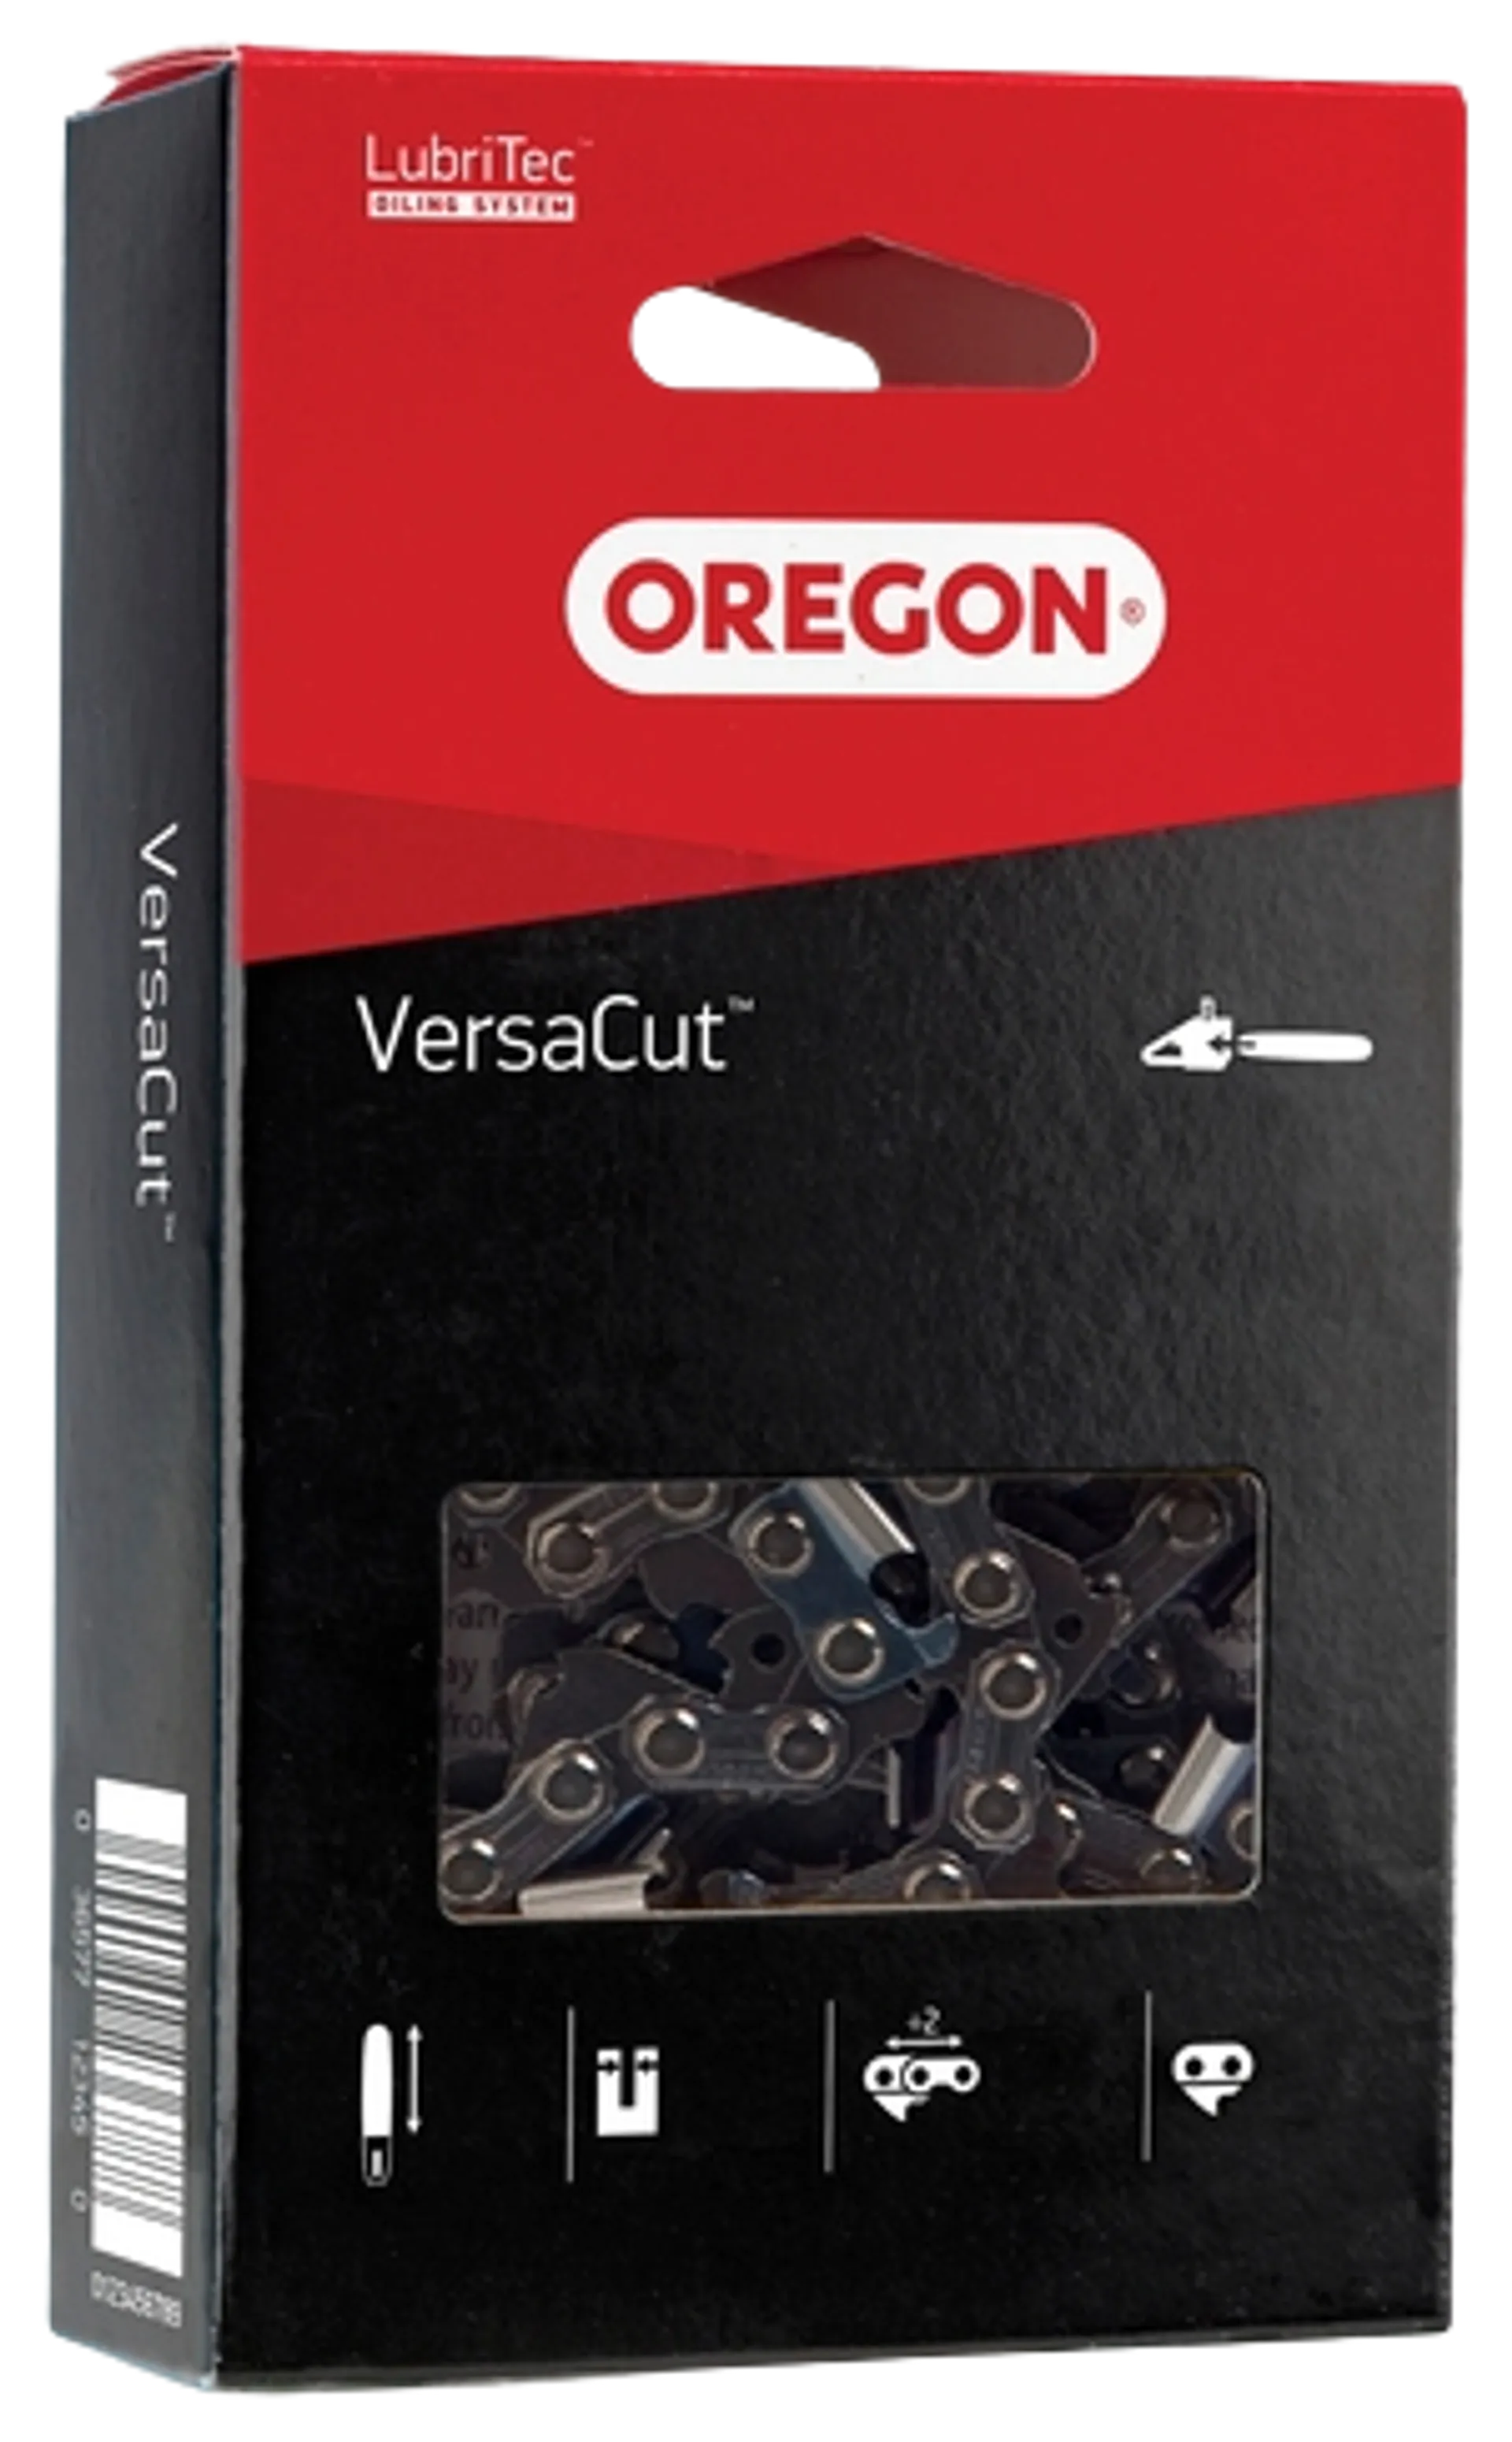 Oregon teräketju Versacut 3/8 1,3mm 53VL - 1